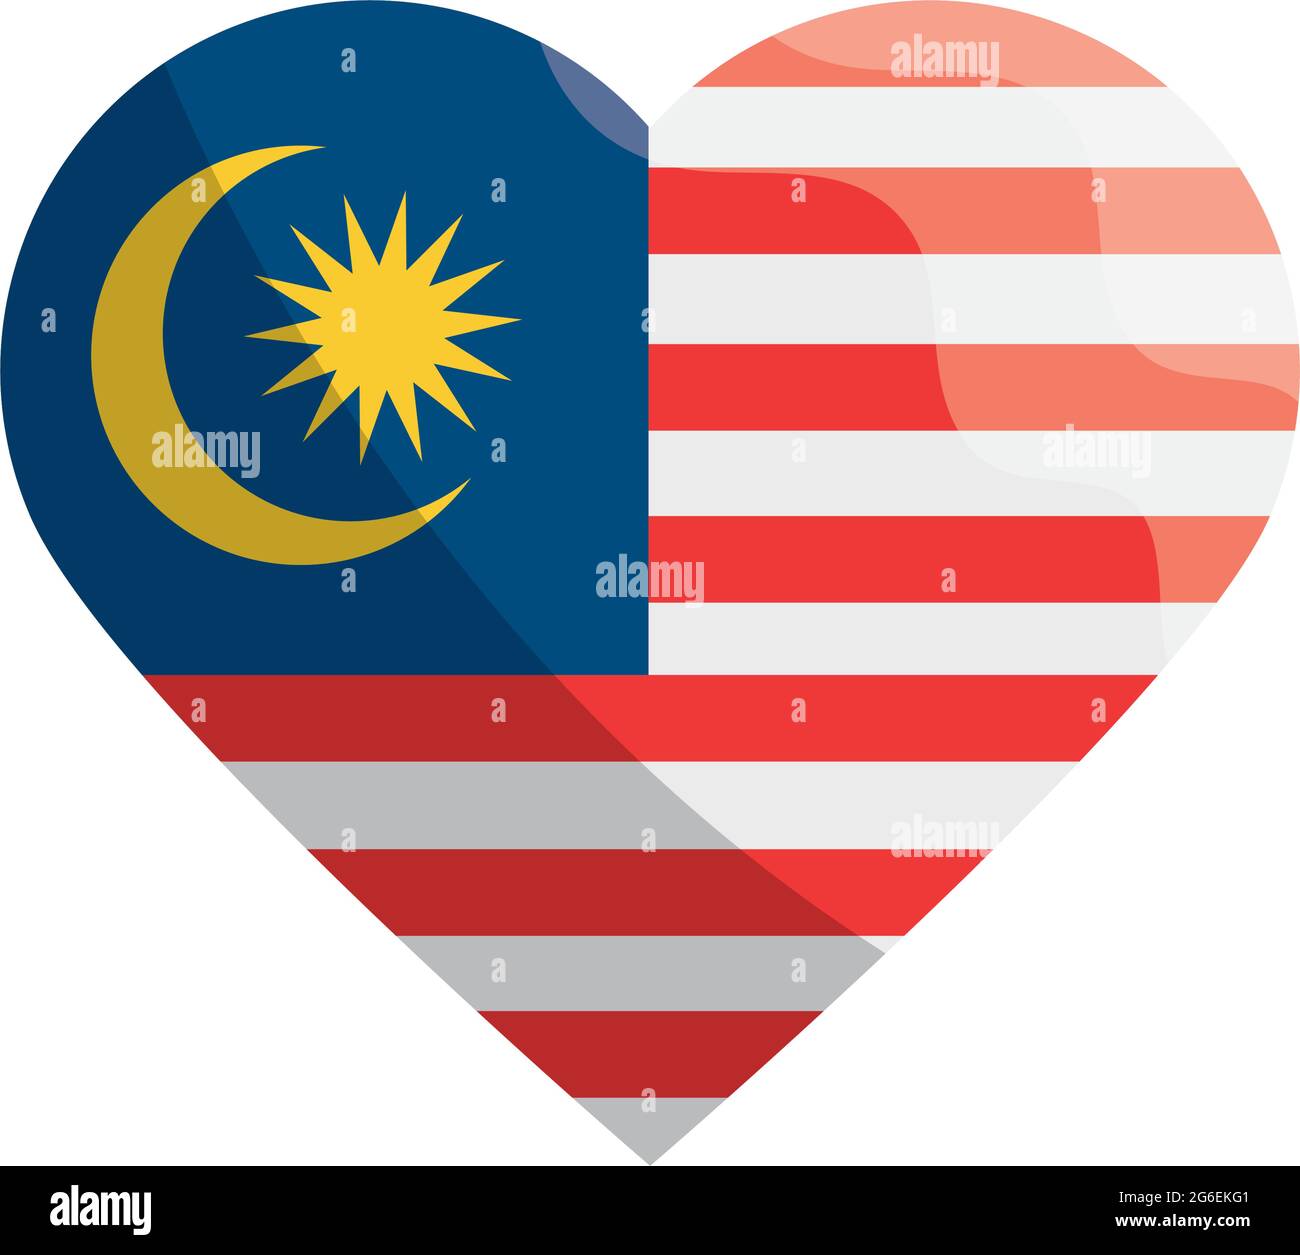 heart with malaysia flag Stock Vector